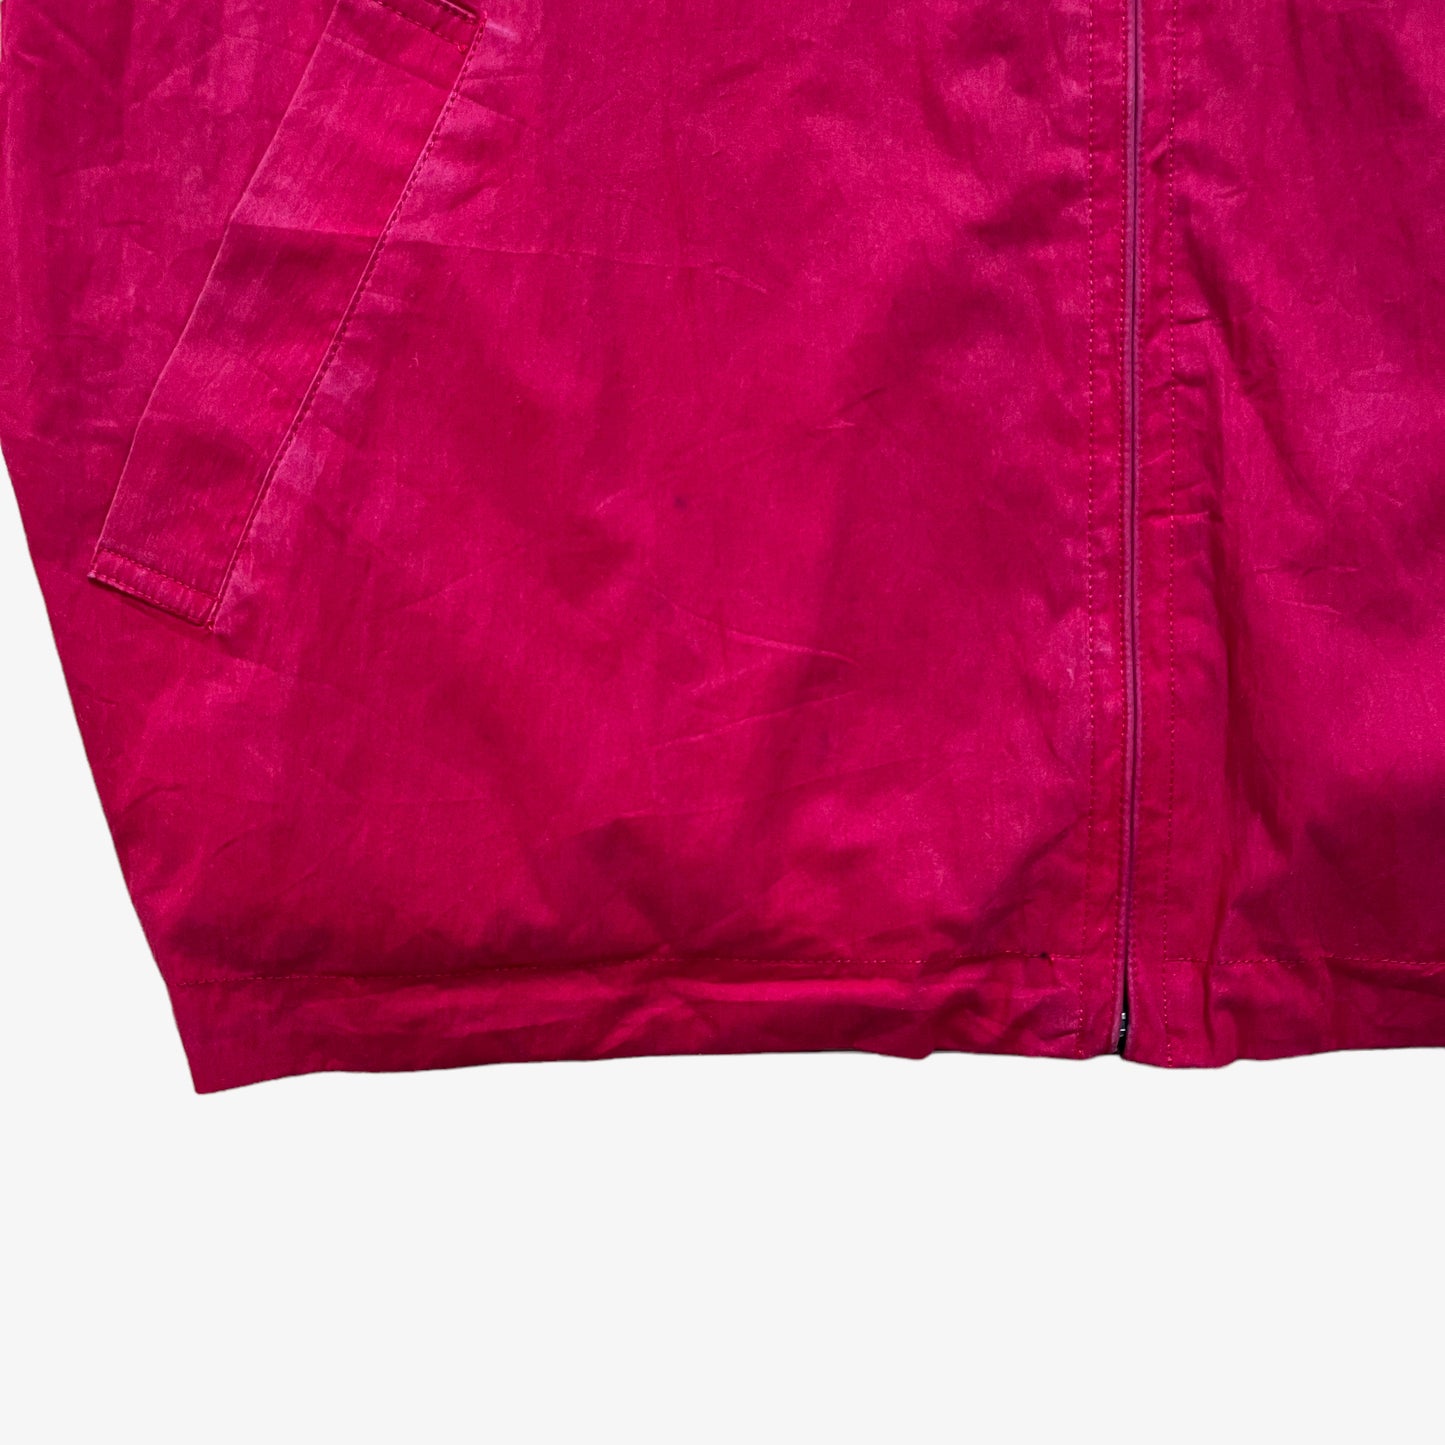 Burberry Reversible Jacket